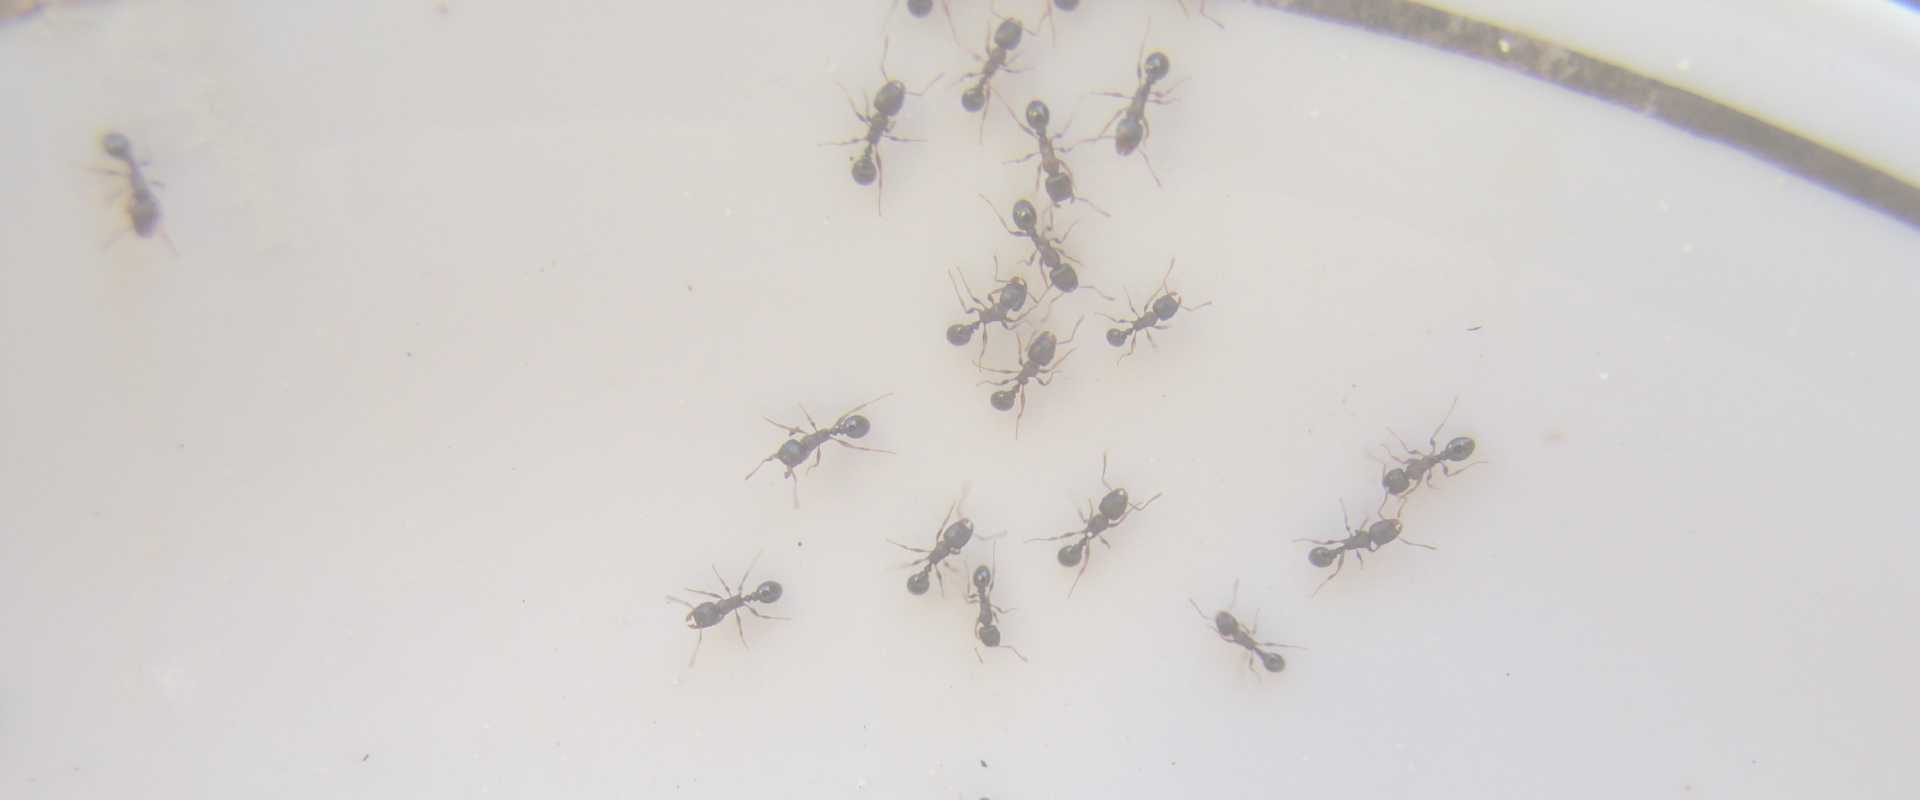 pest control in eldersburg md